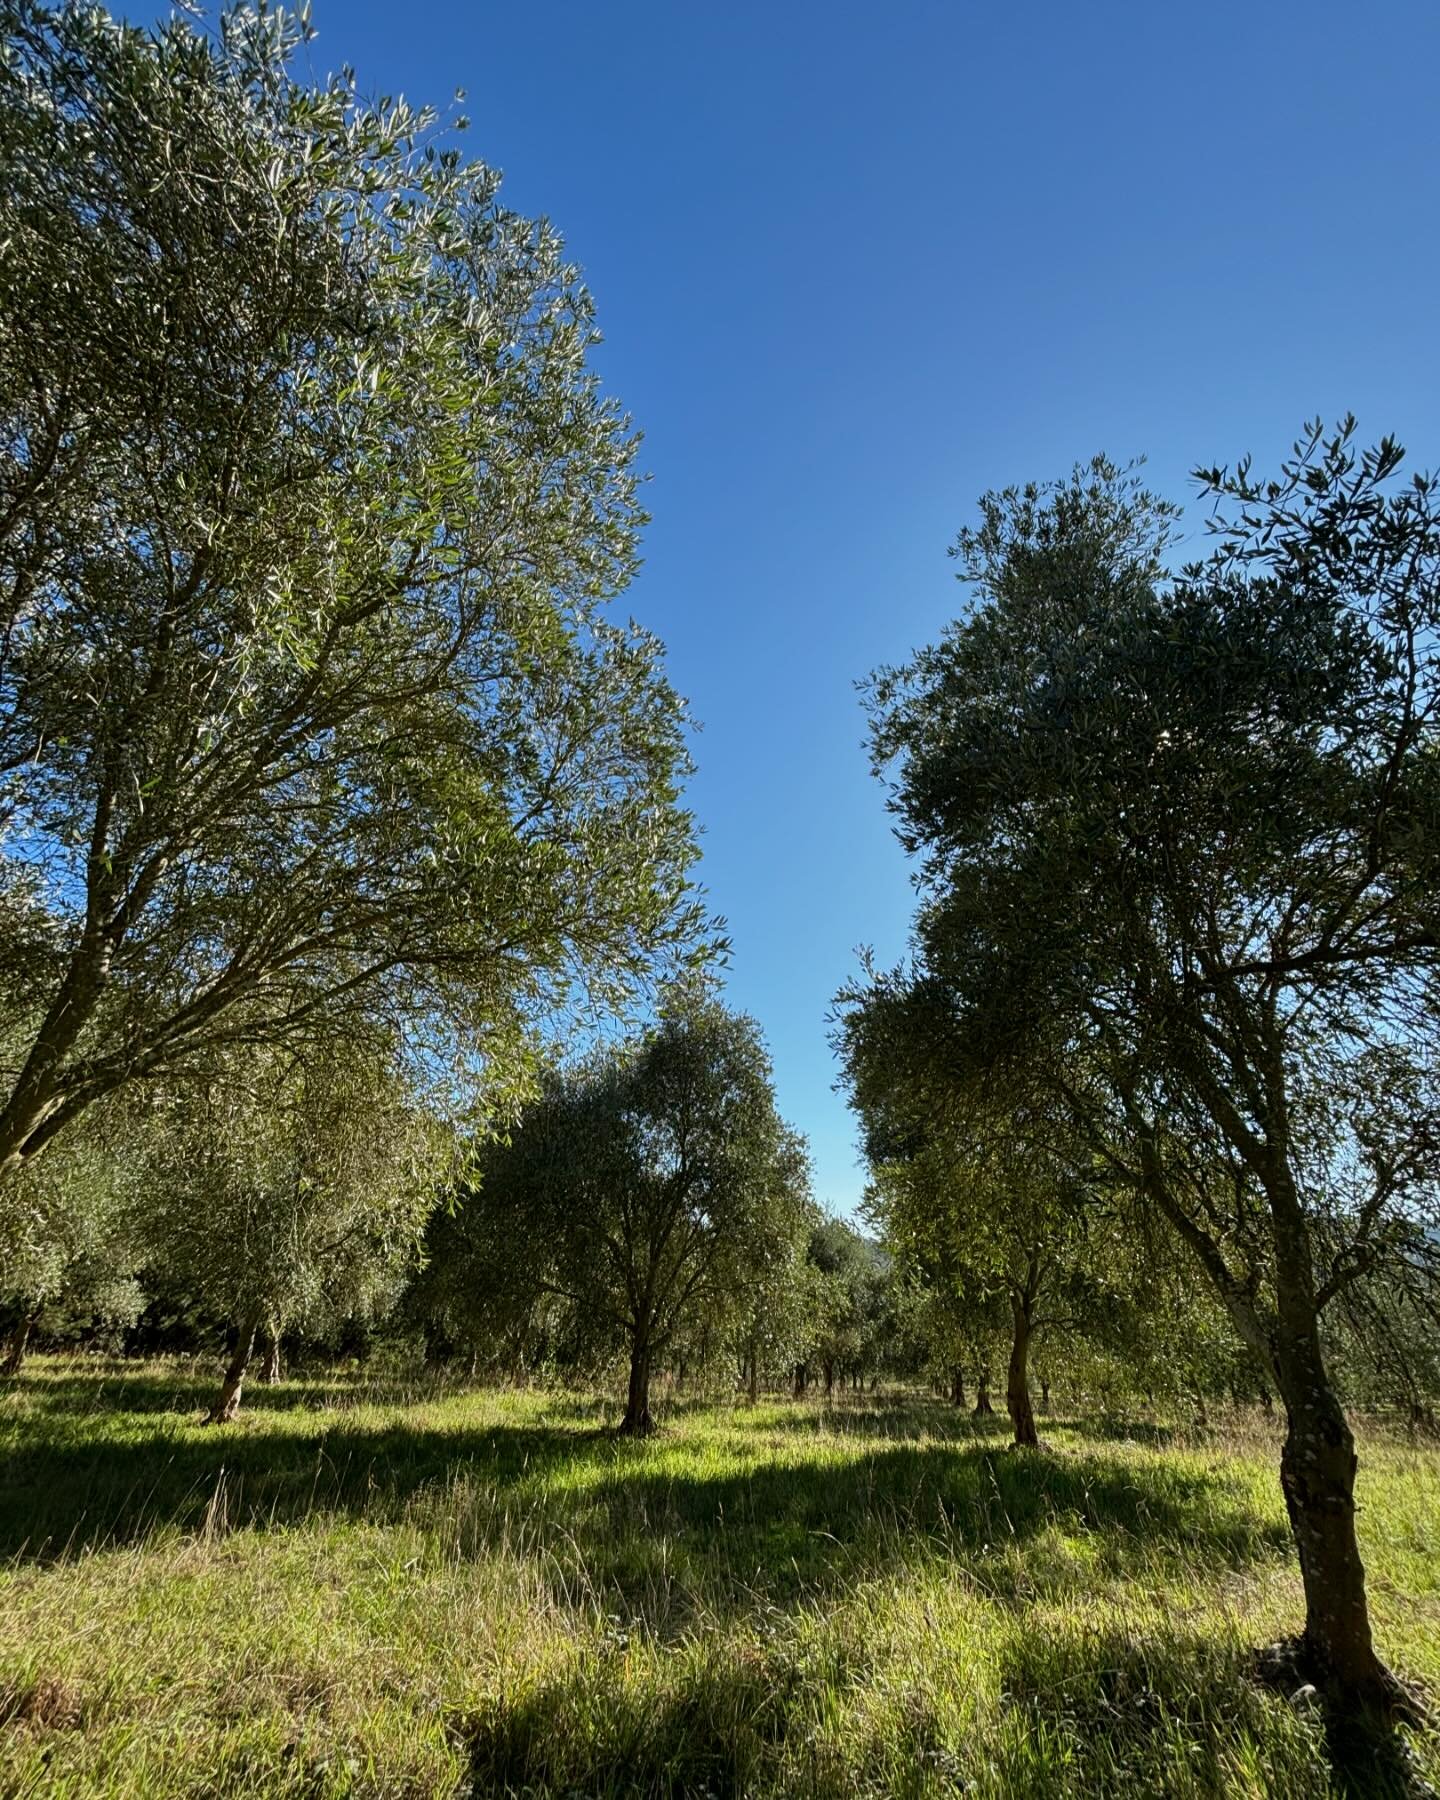 What a glorious day to be out in the grove. #mannahillestate #autumnweather #olivegrove #organic #organicfarmingaustralia #farminglife #sunnyday #joy